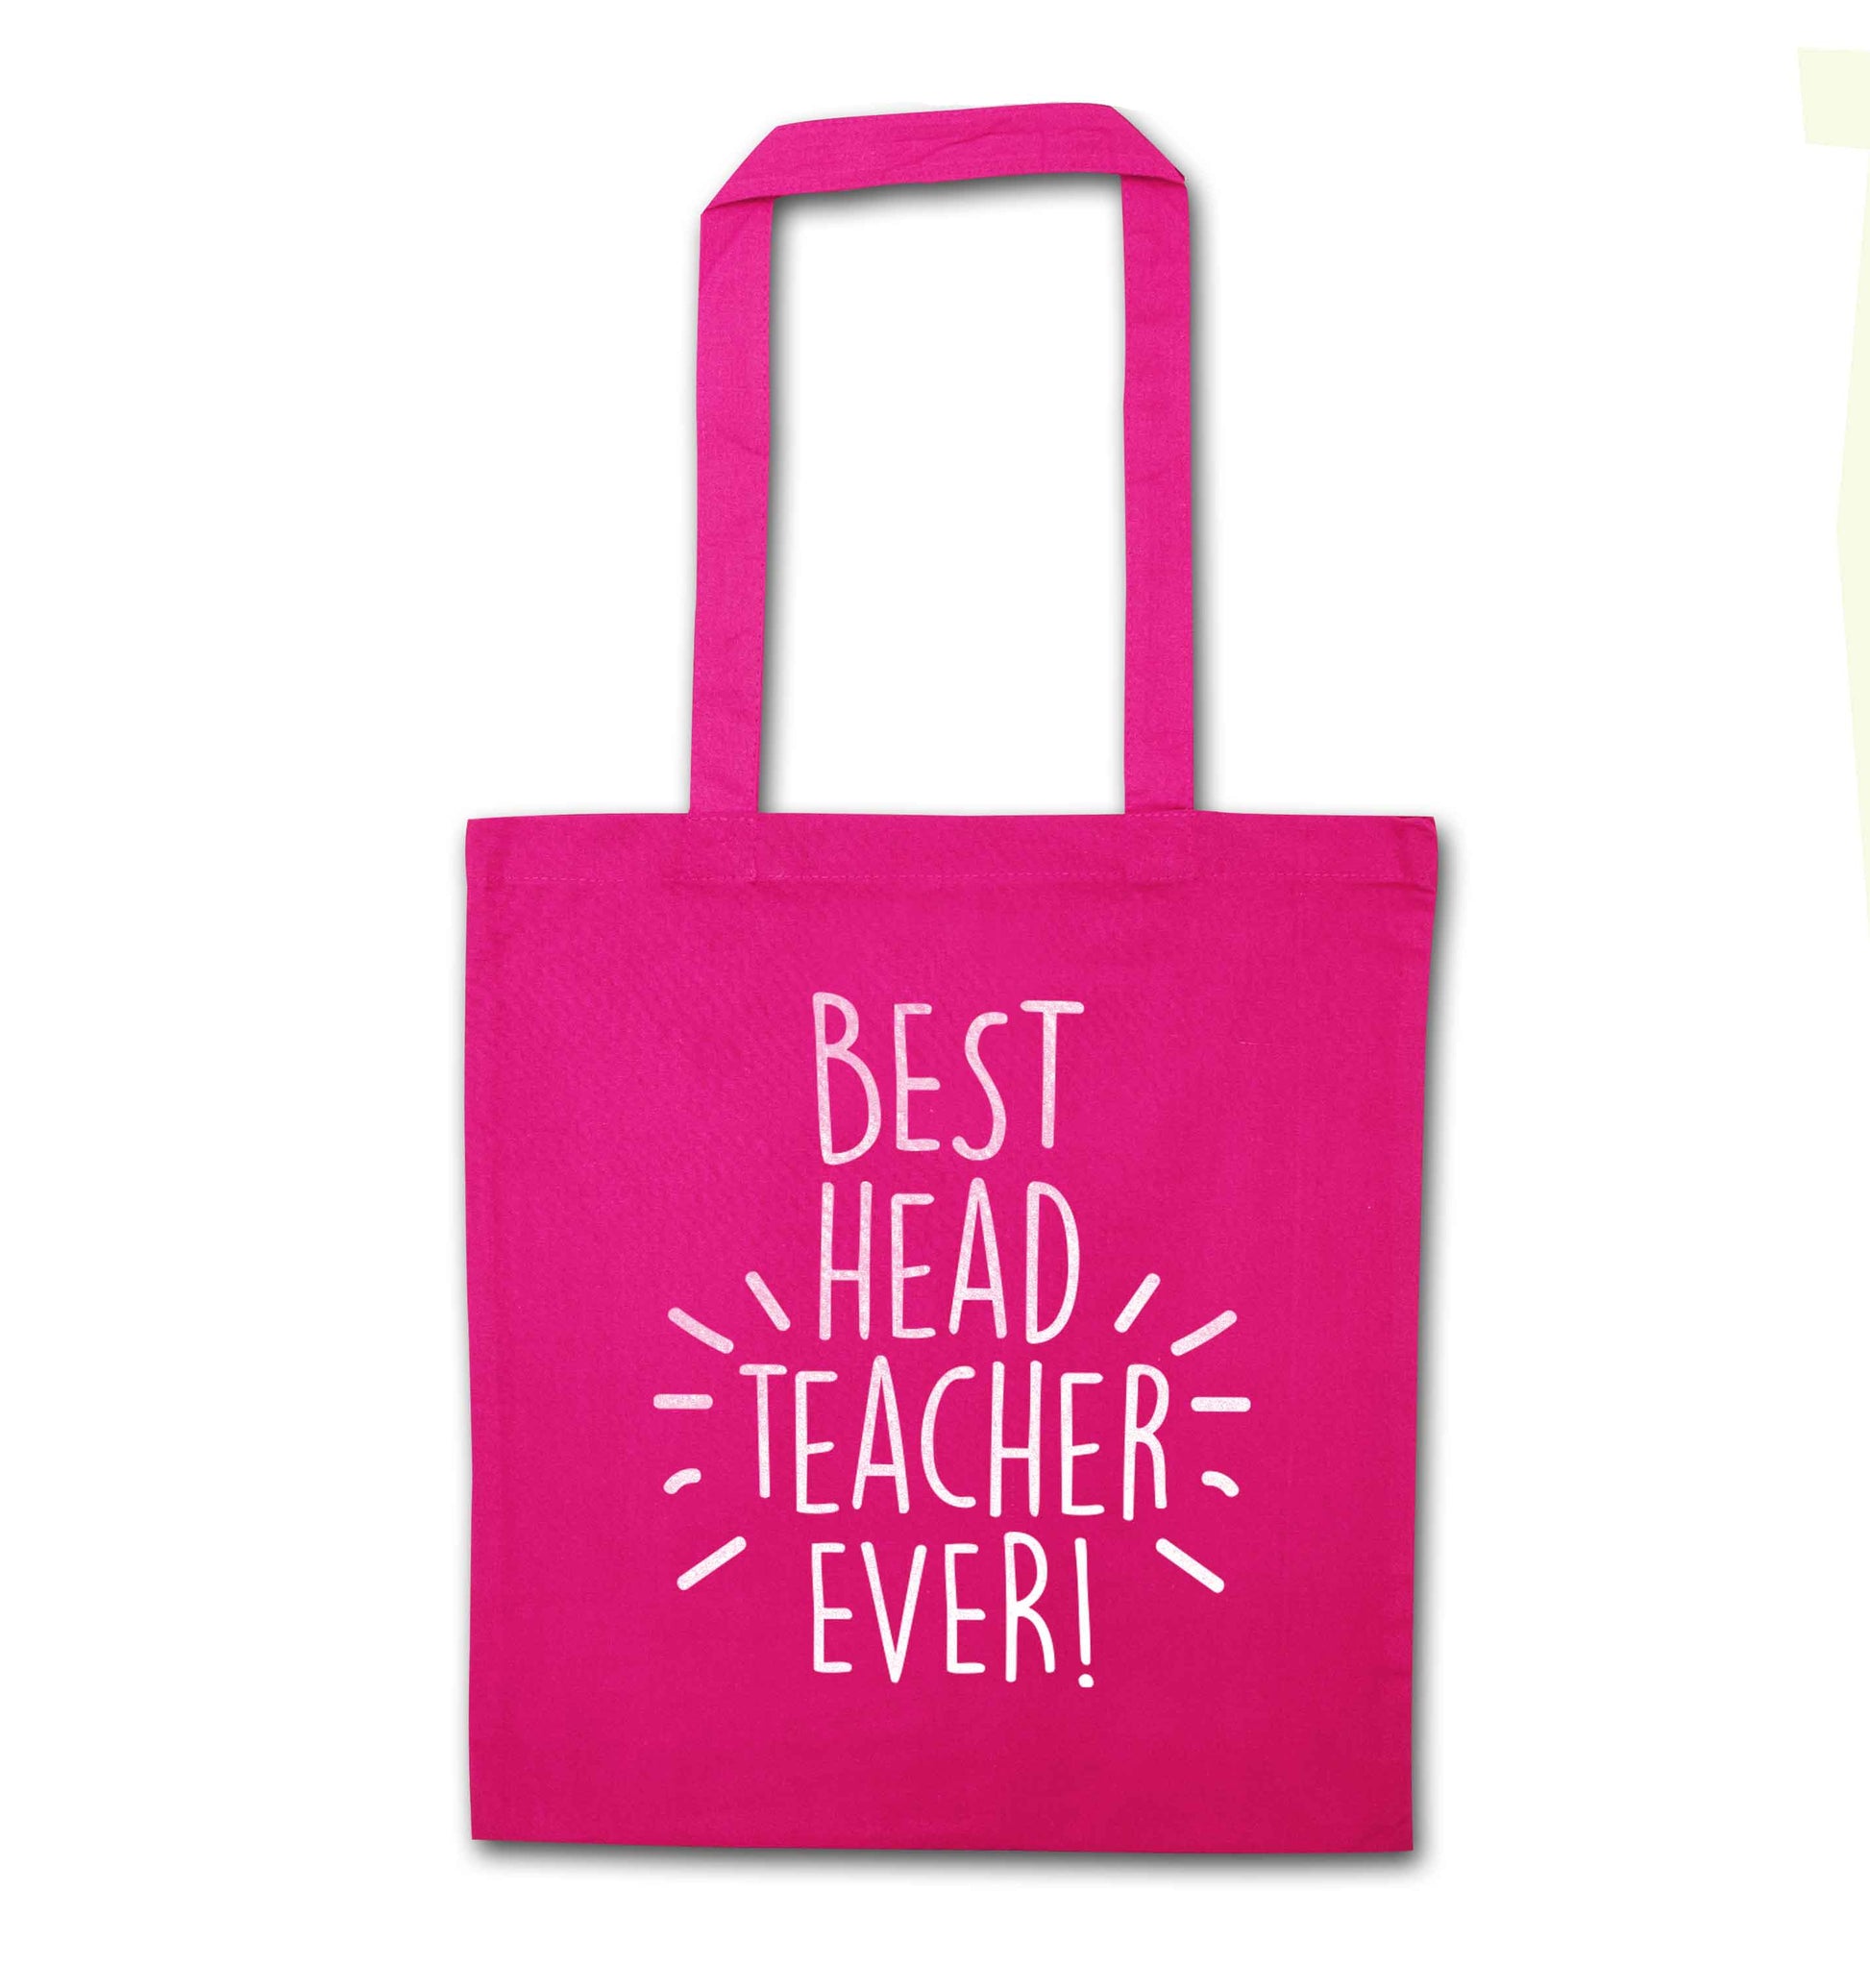 Best head teacher ever! pink tote bag